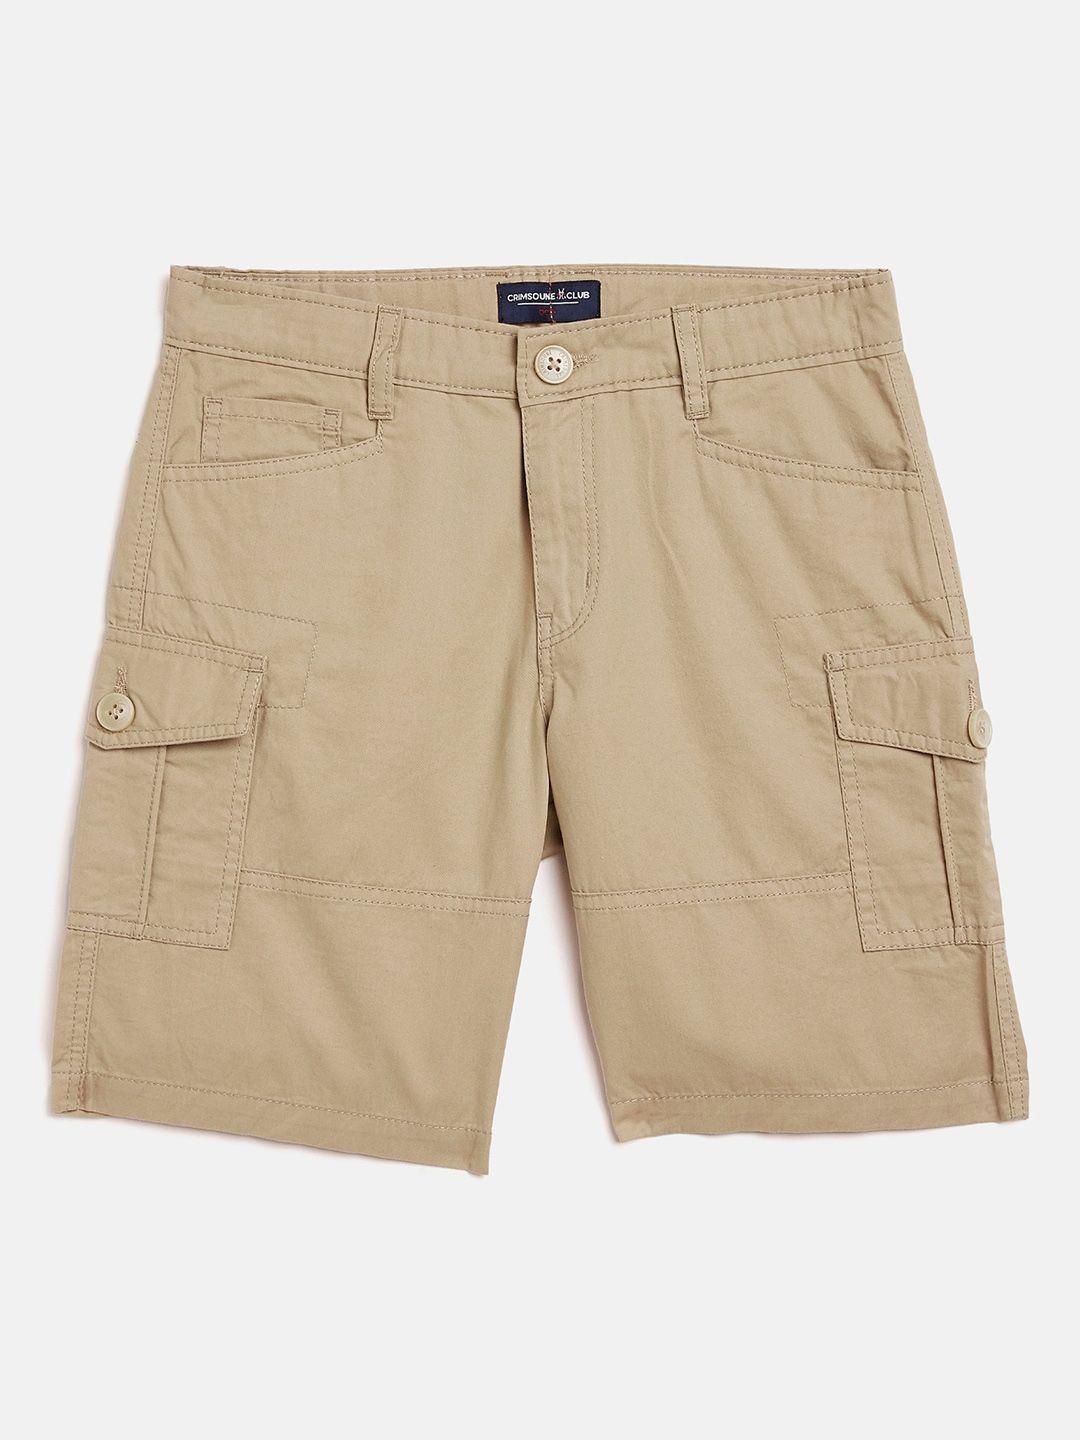 crimsoune club boys beige solid slim fit cargo shorts